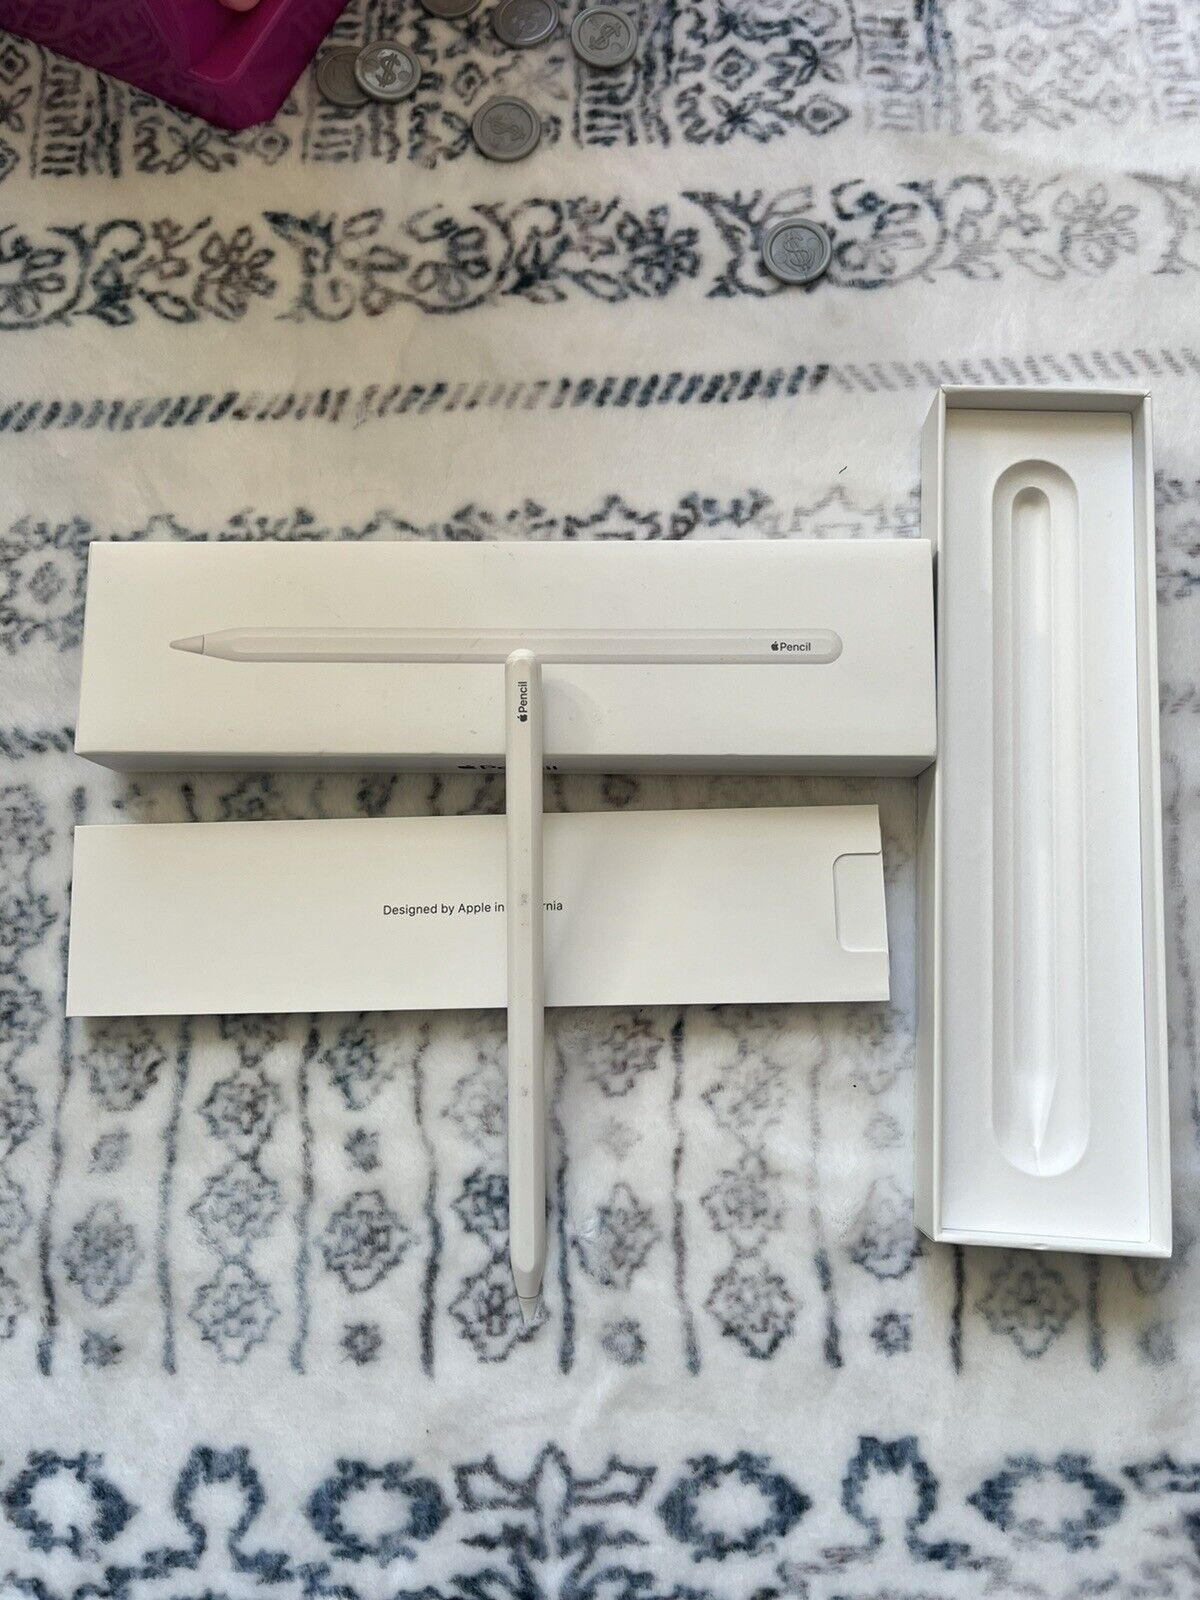 Rarely Used Apple Pencil Stylus (2nd Generation), Including Original Manual&Box